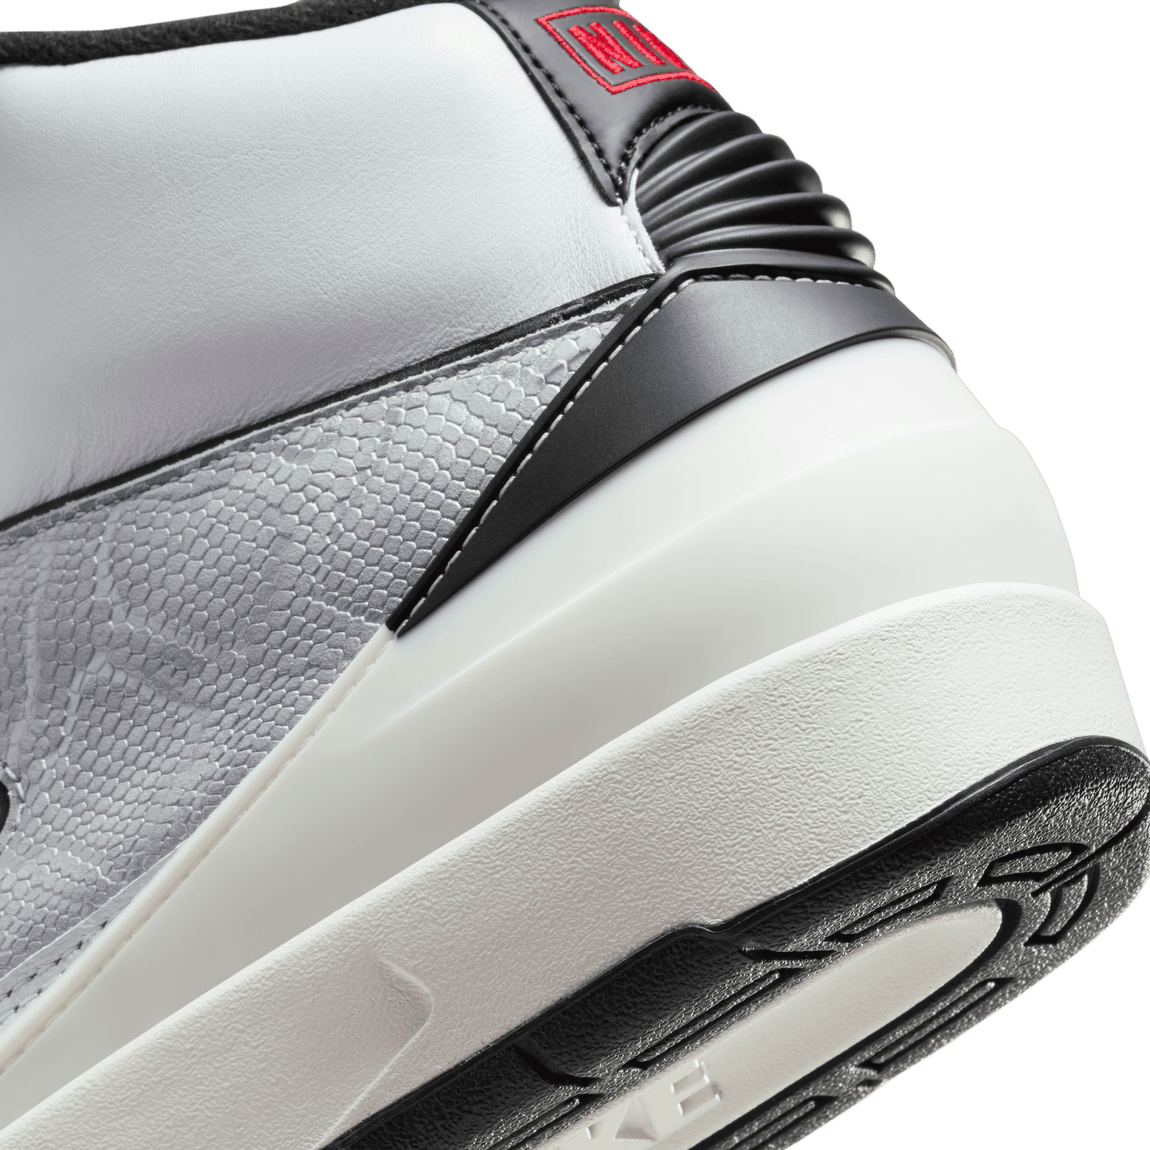 Air Jordan 2 Retro (White / Fire Red / Black / Sail) Release Date 1/20 - Air Jordan 2 Retro (White / Fire Red / Black / Sail) Release Date 1/20 - 